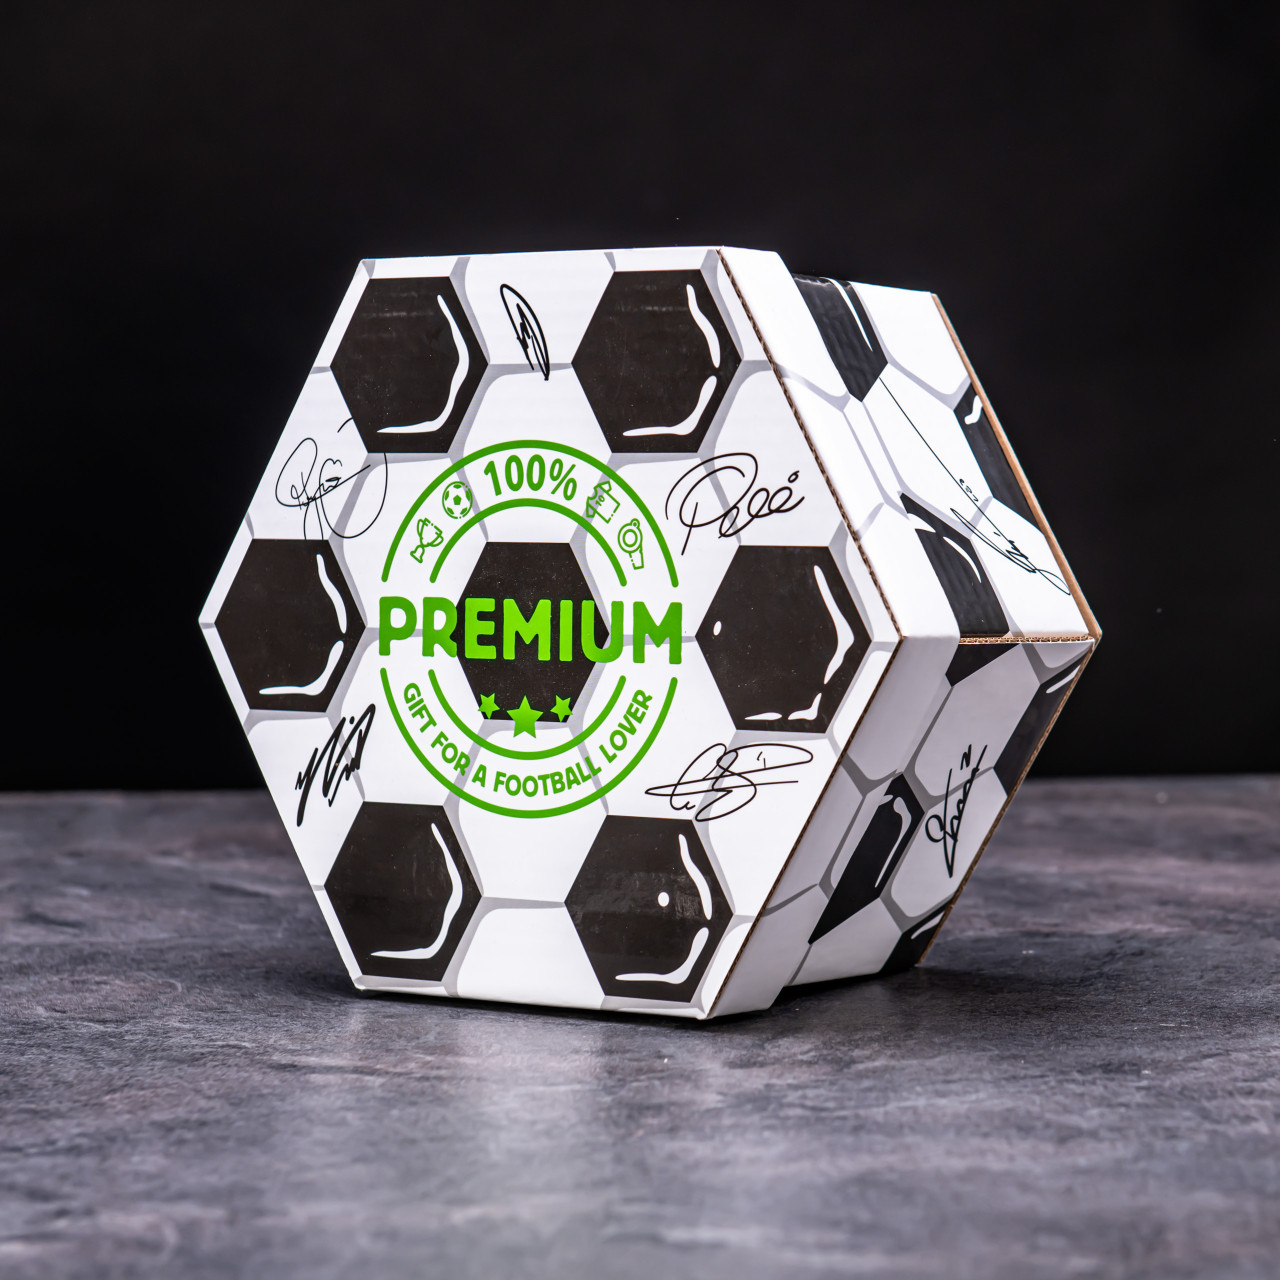 Hexagon plný kvalitní kosmetiky Levandule - Fotbalový